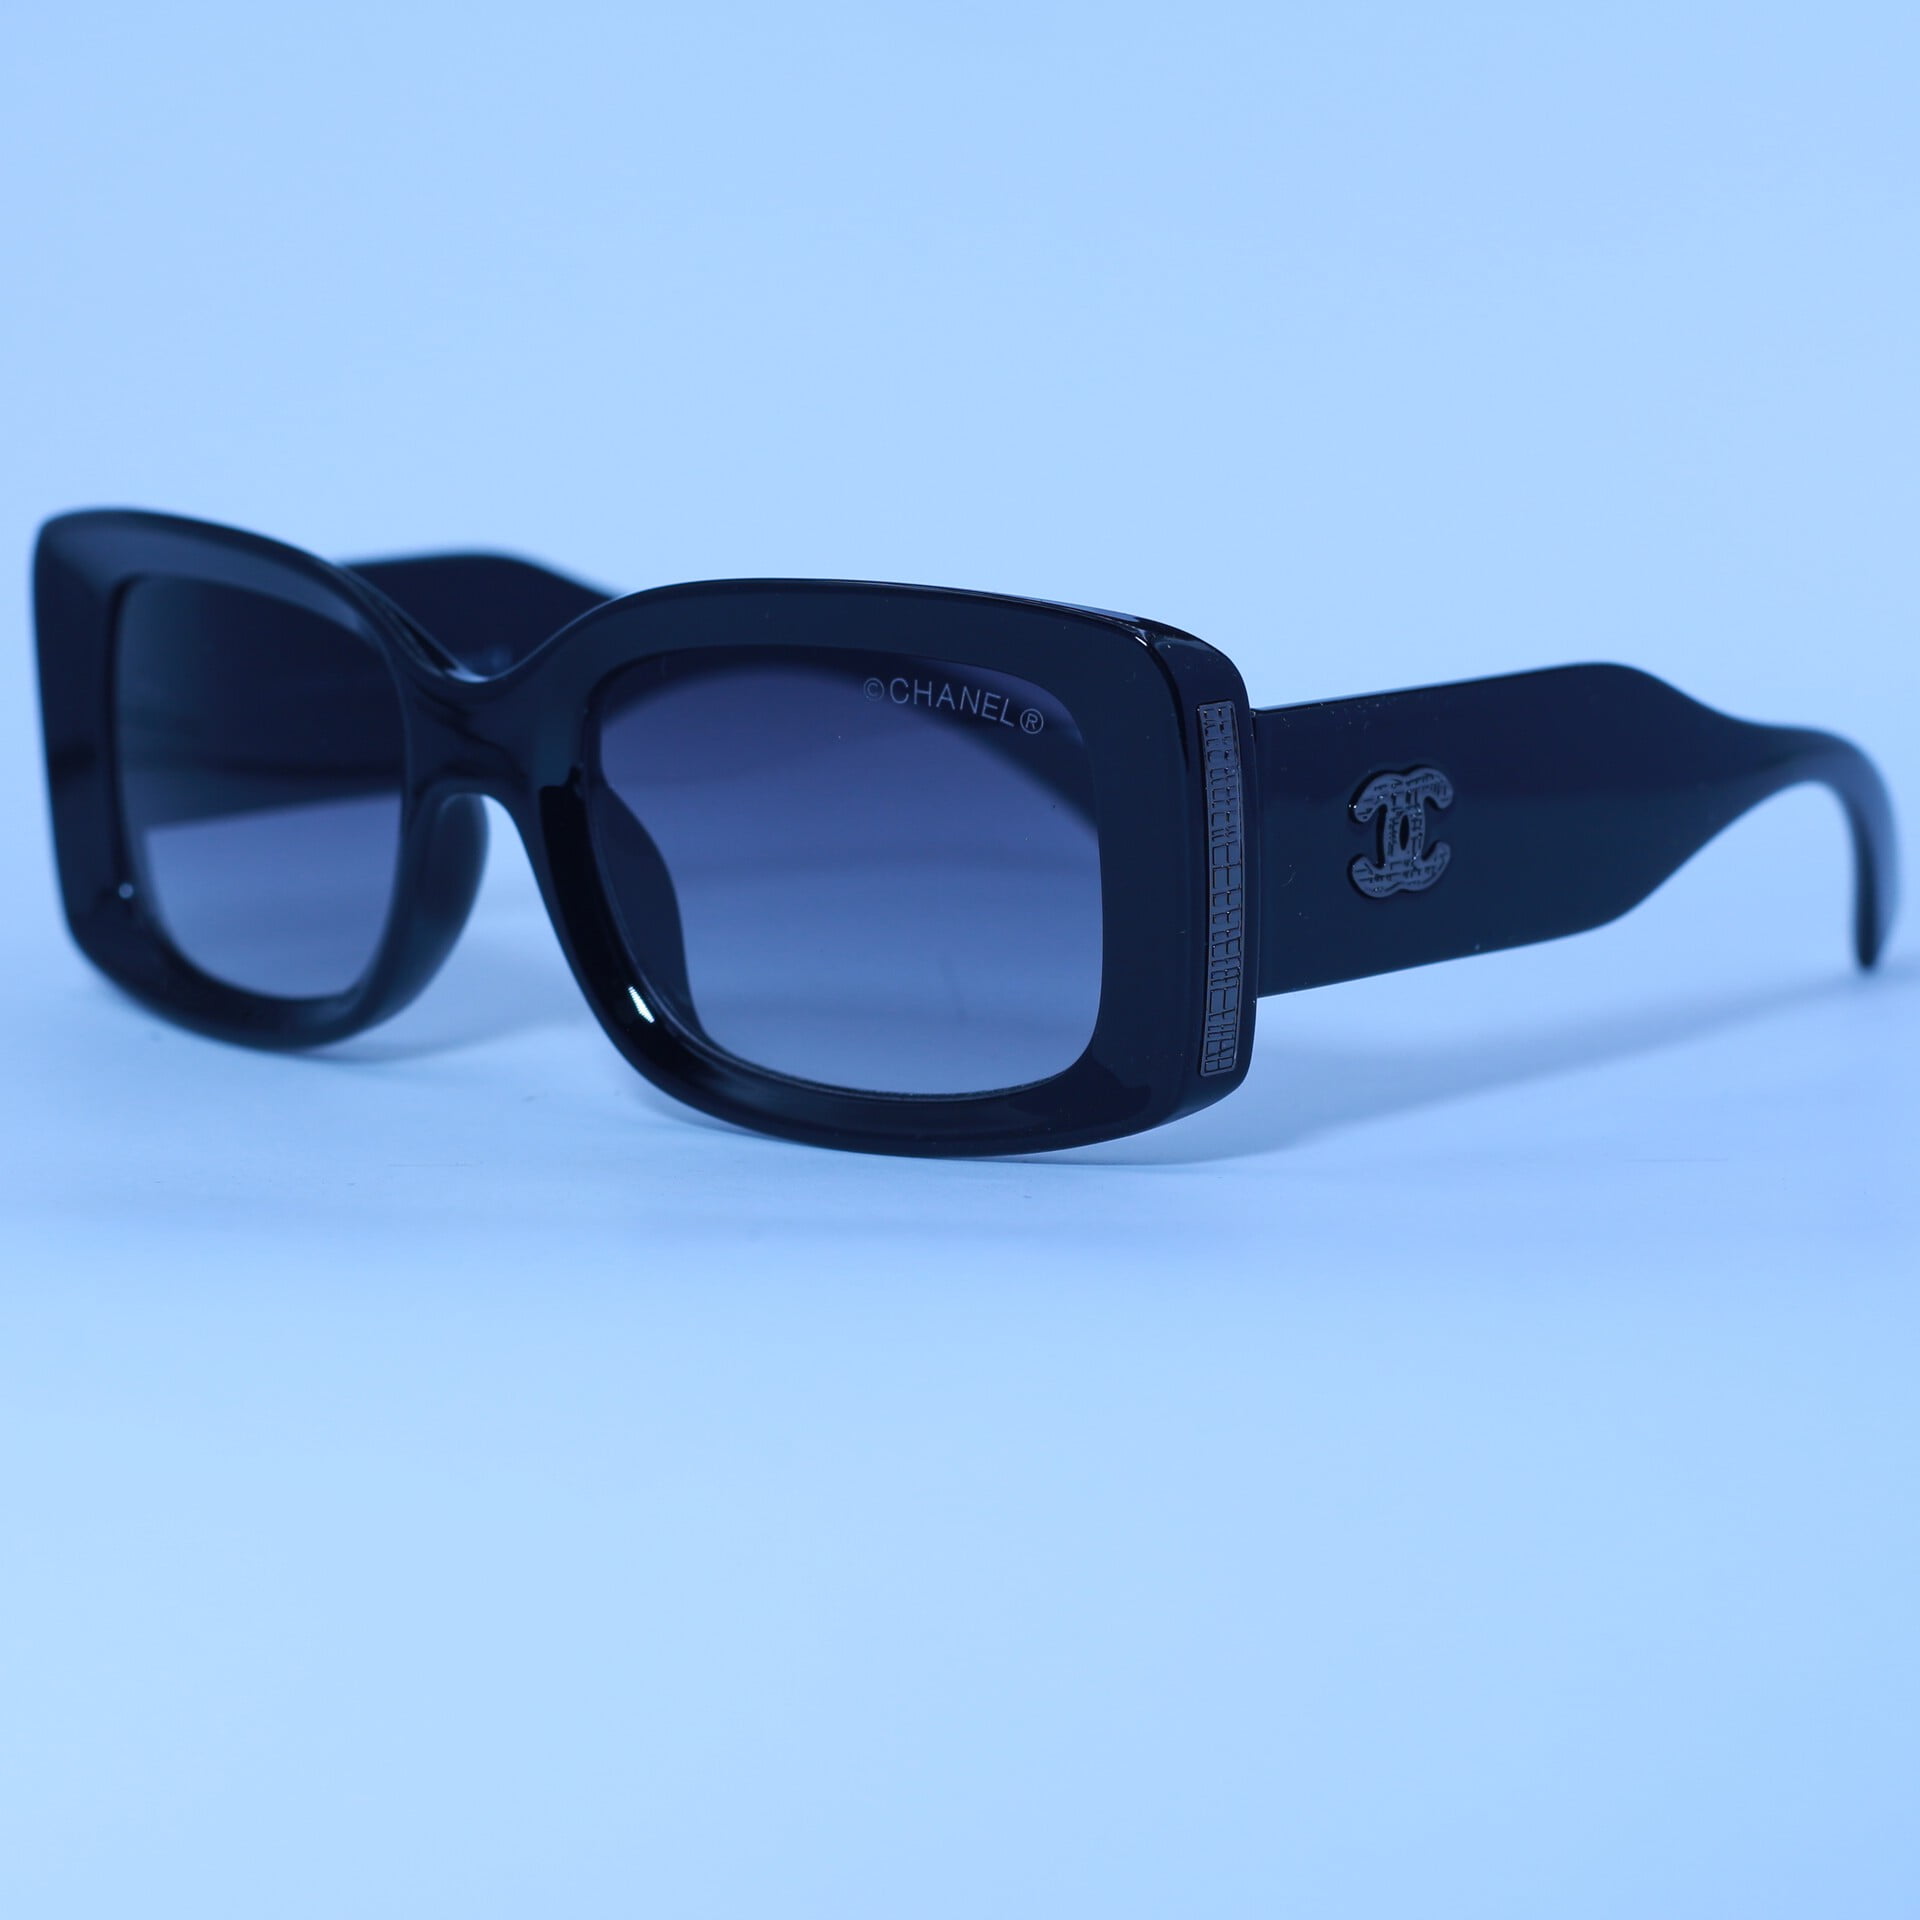 Chanel Sunglasses 2218B - Buy Online Eye Glasses Frames in Pakistan ...